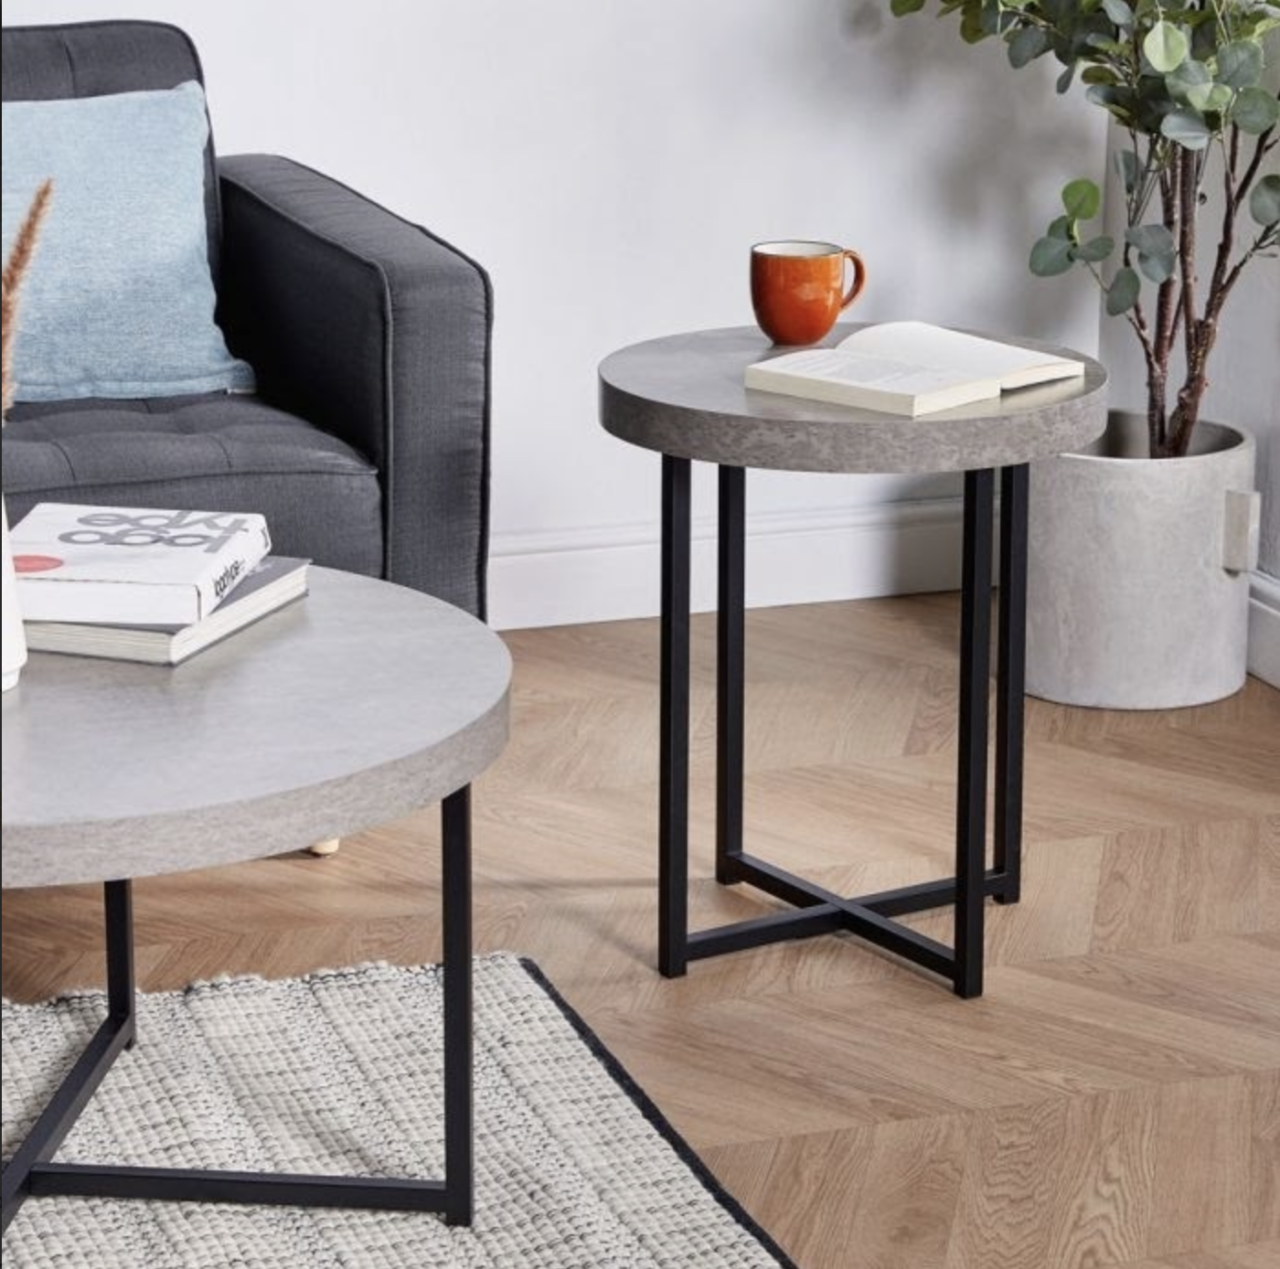 Q-Furniture Concrete Manufacturer Ideas For A Modern Home